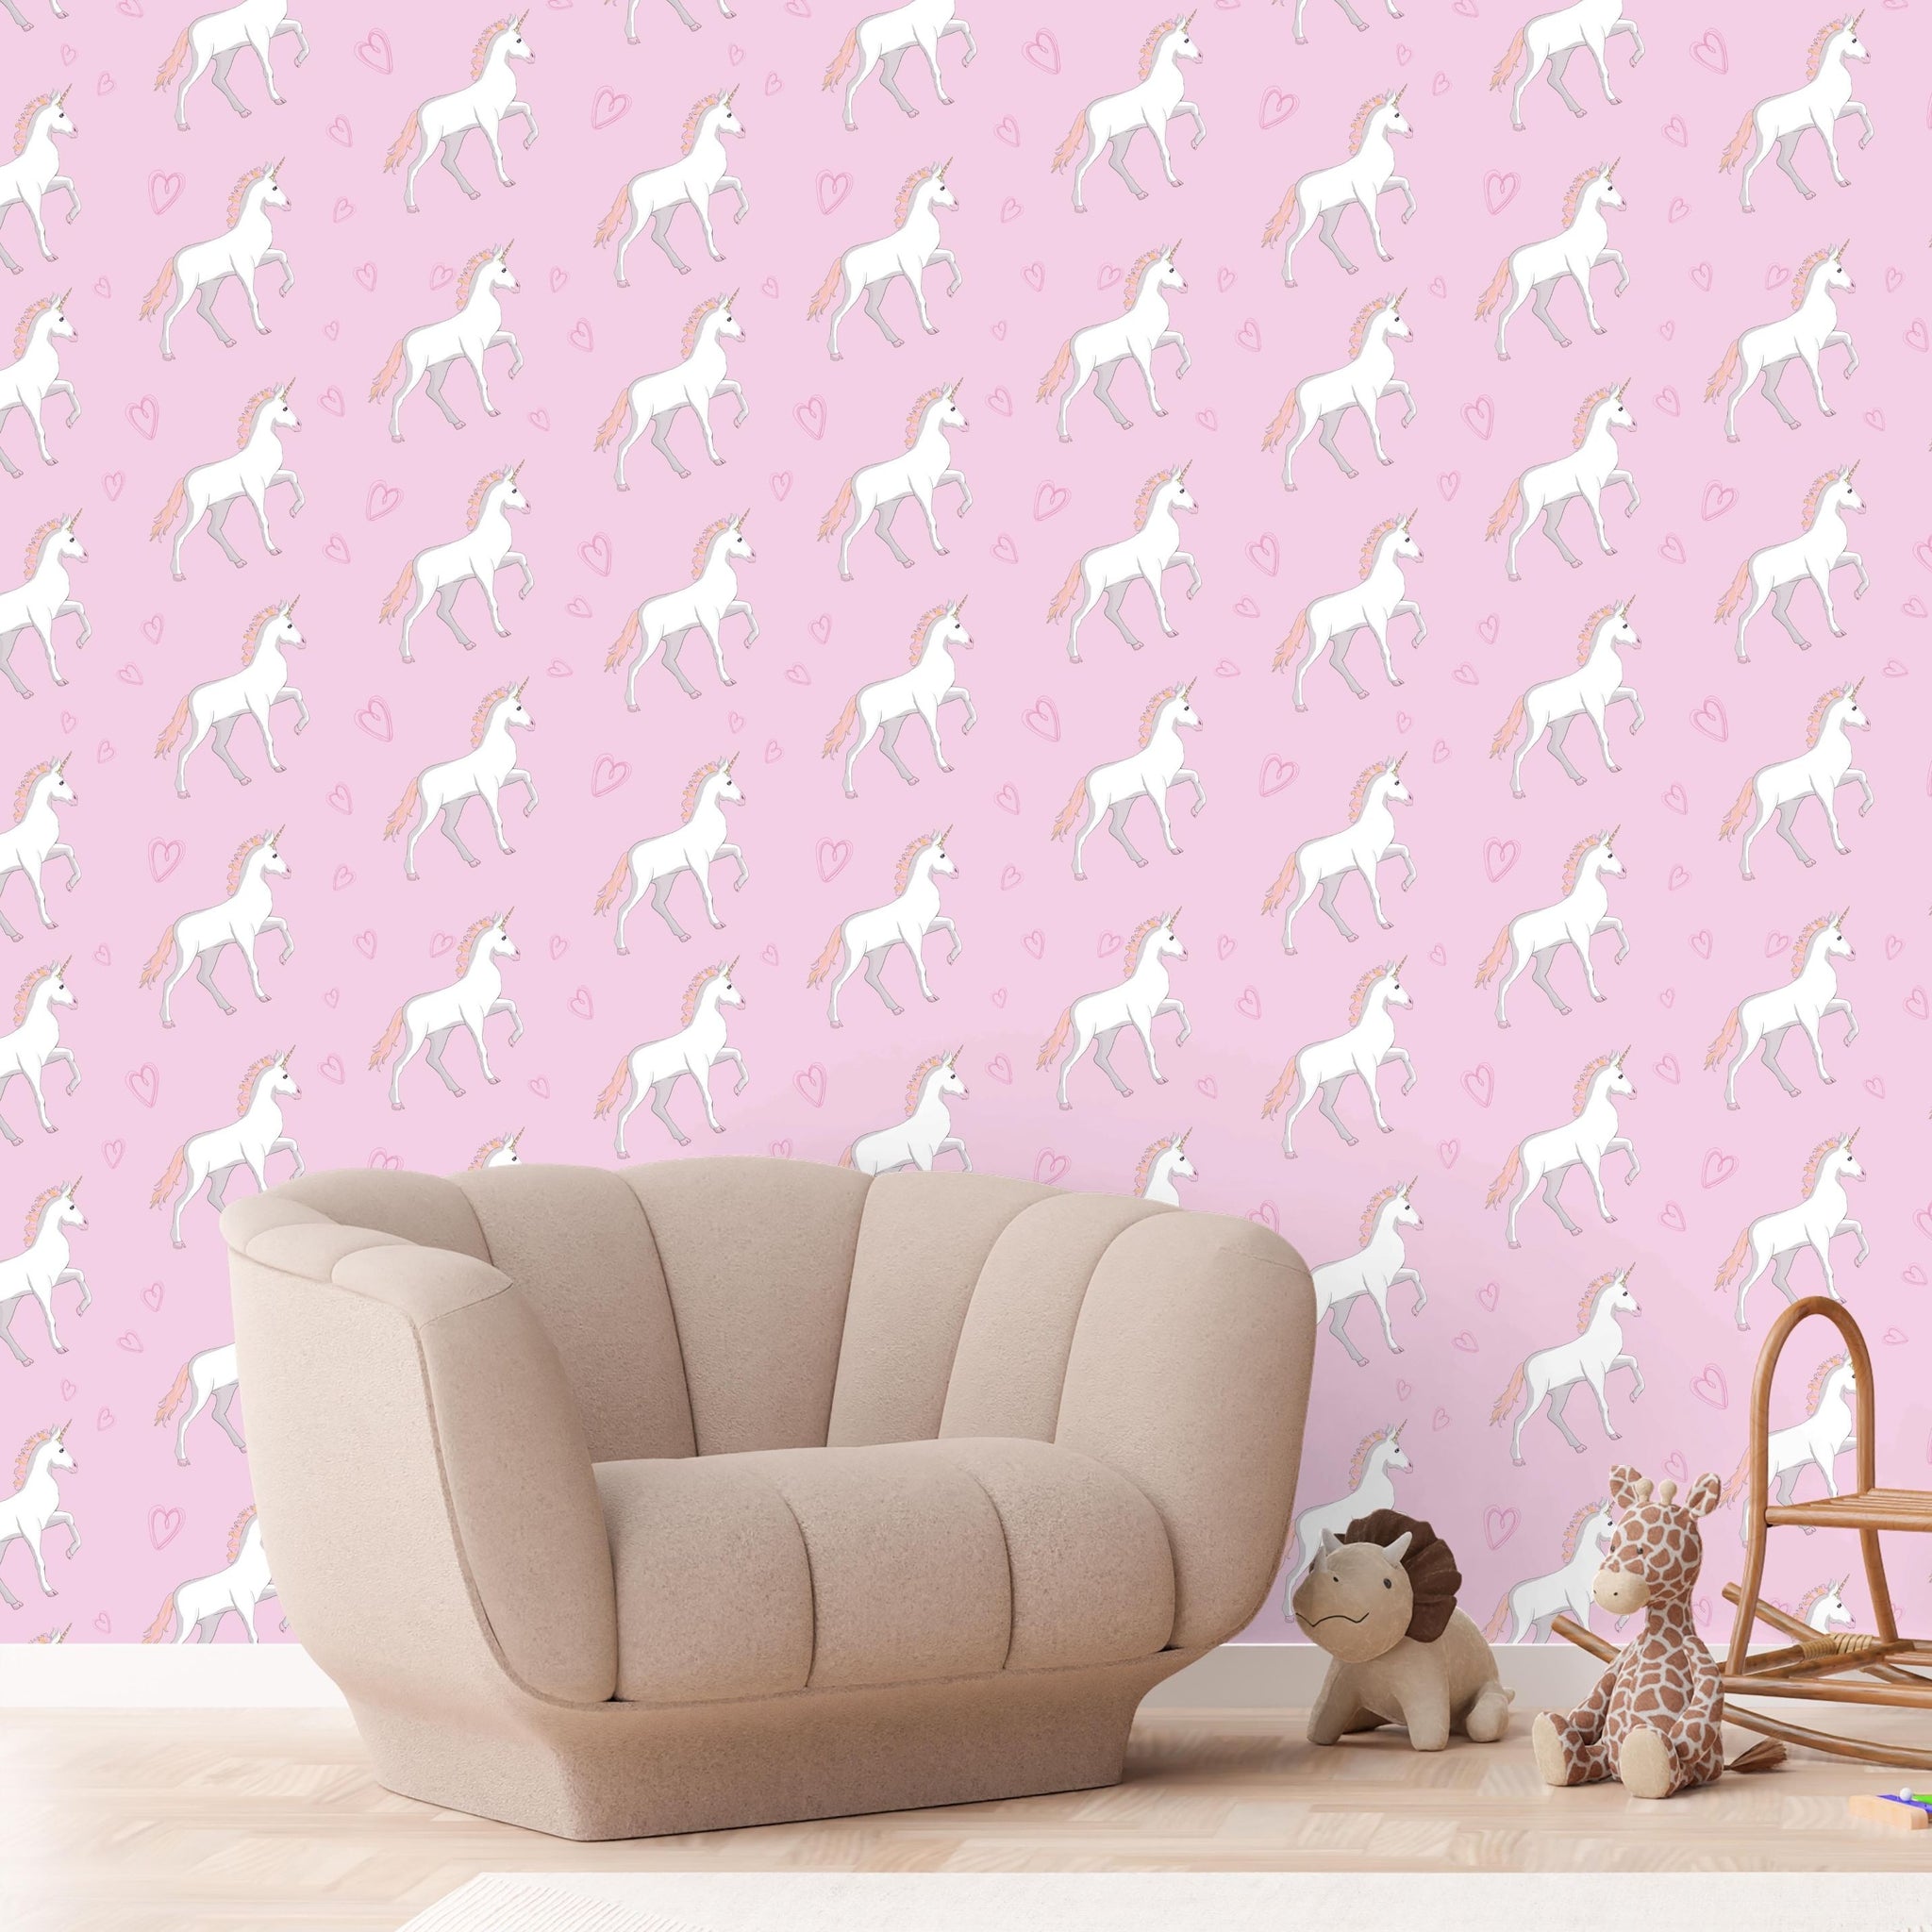 Unicorn Peel and Stick Wallpaper - Unicorn Trails